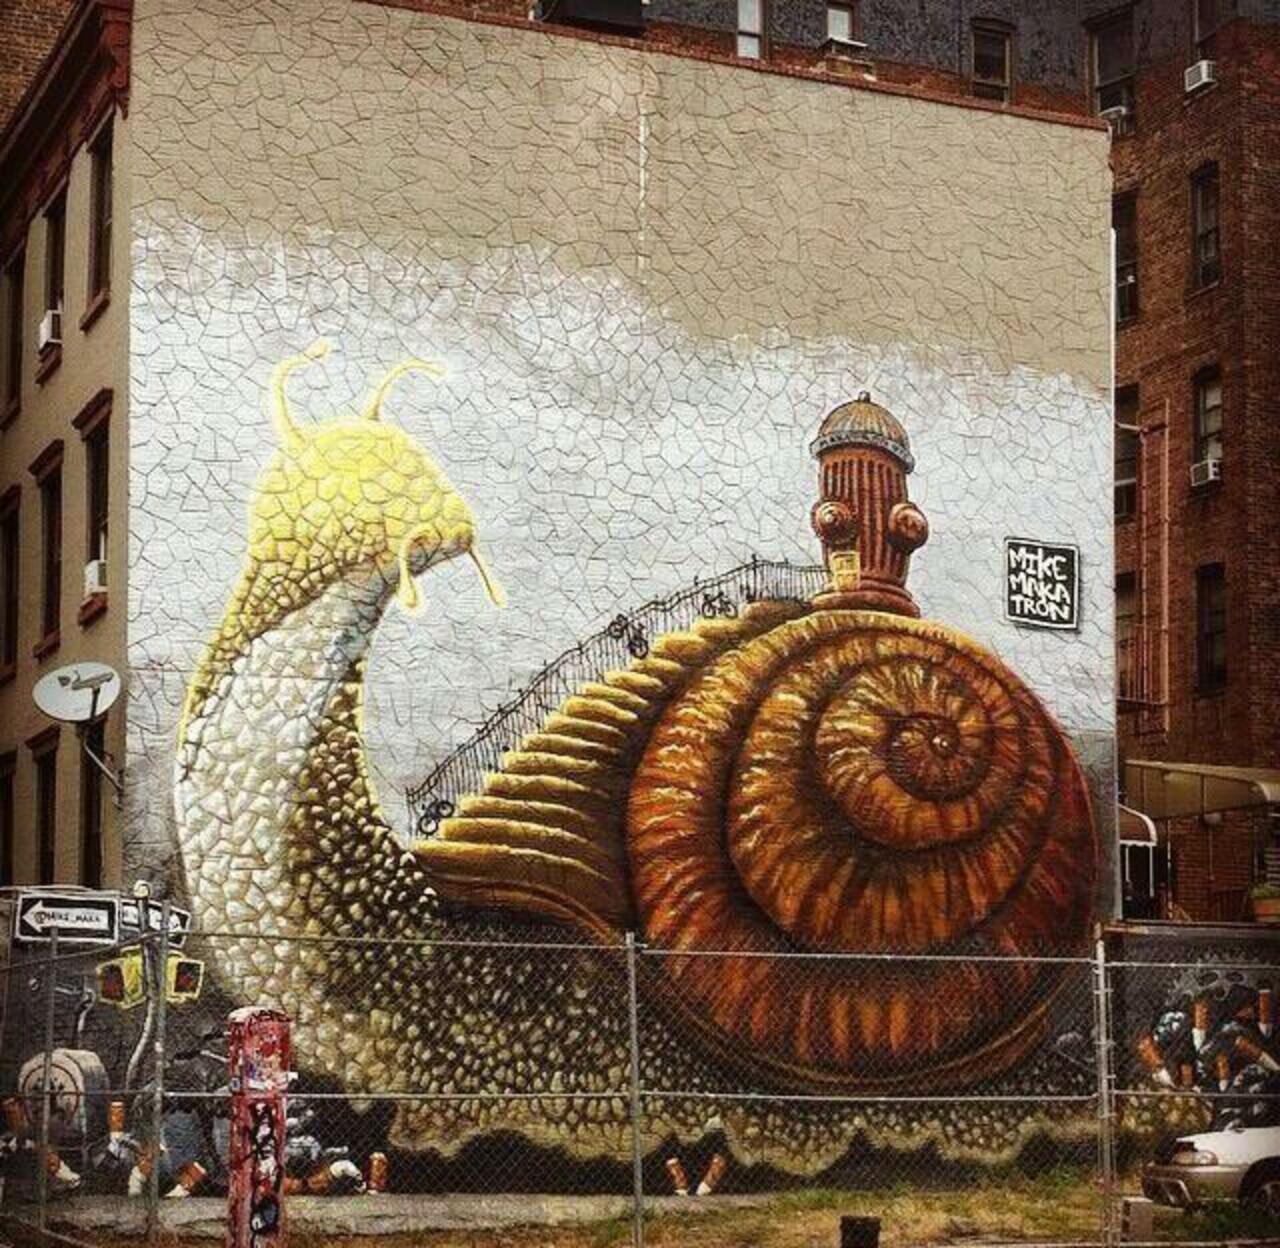 Artist Mike Makatron fantastic large scale Street Art located in Brooklyn, NY #art #graffiti #mural #streetart http://t.co/AwS3k4jUwP